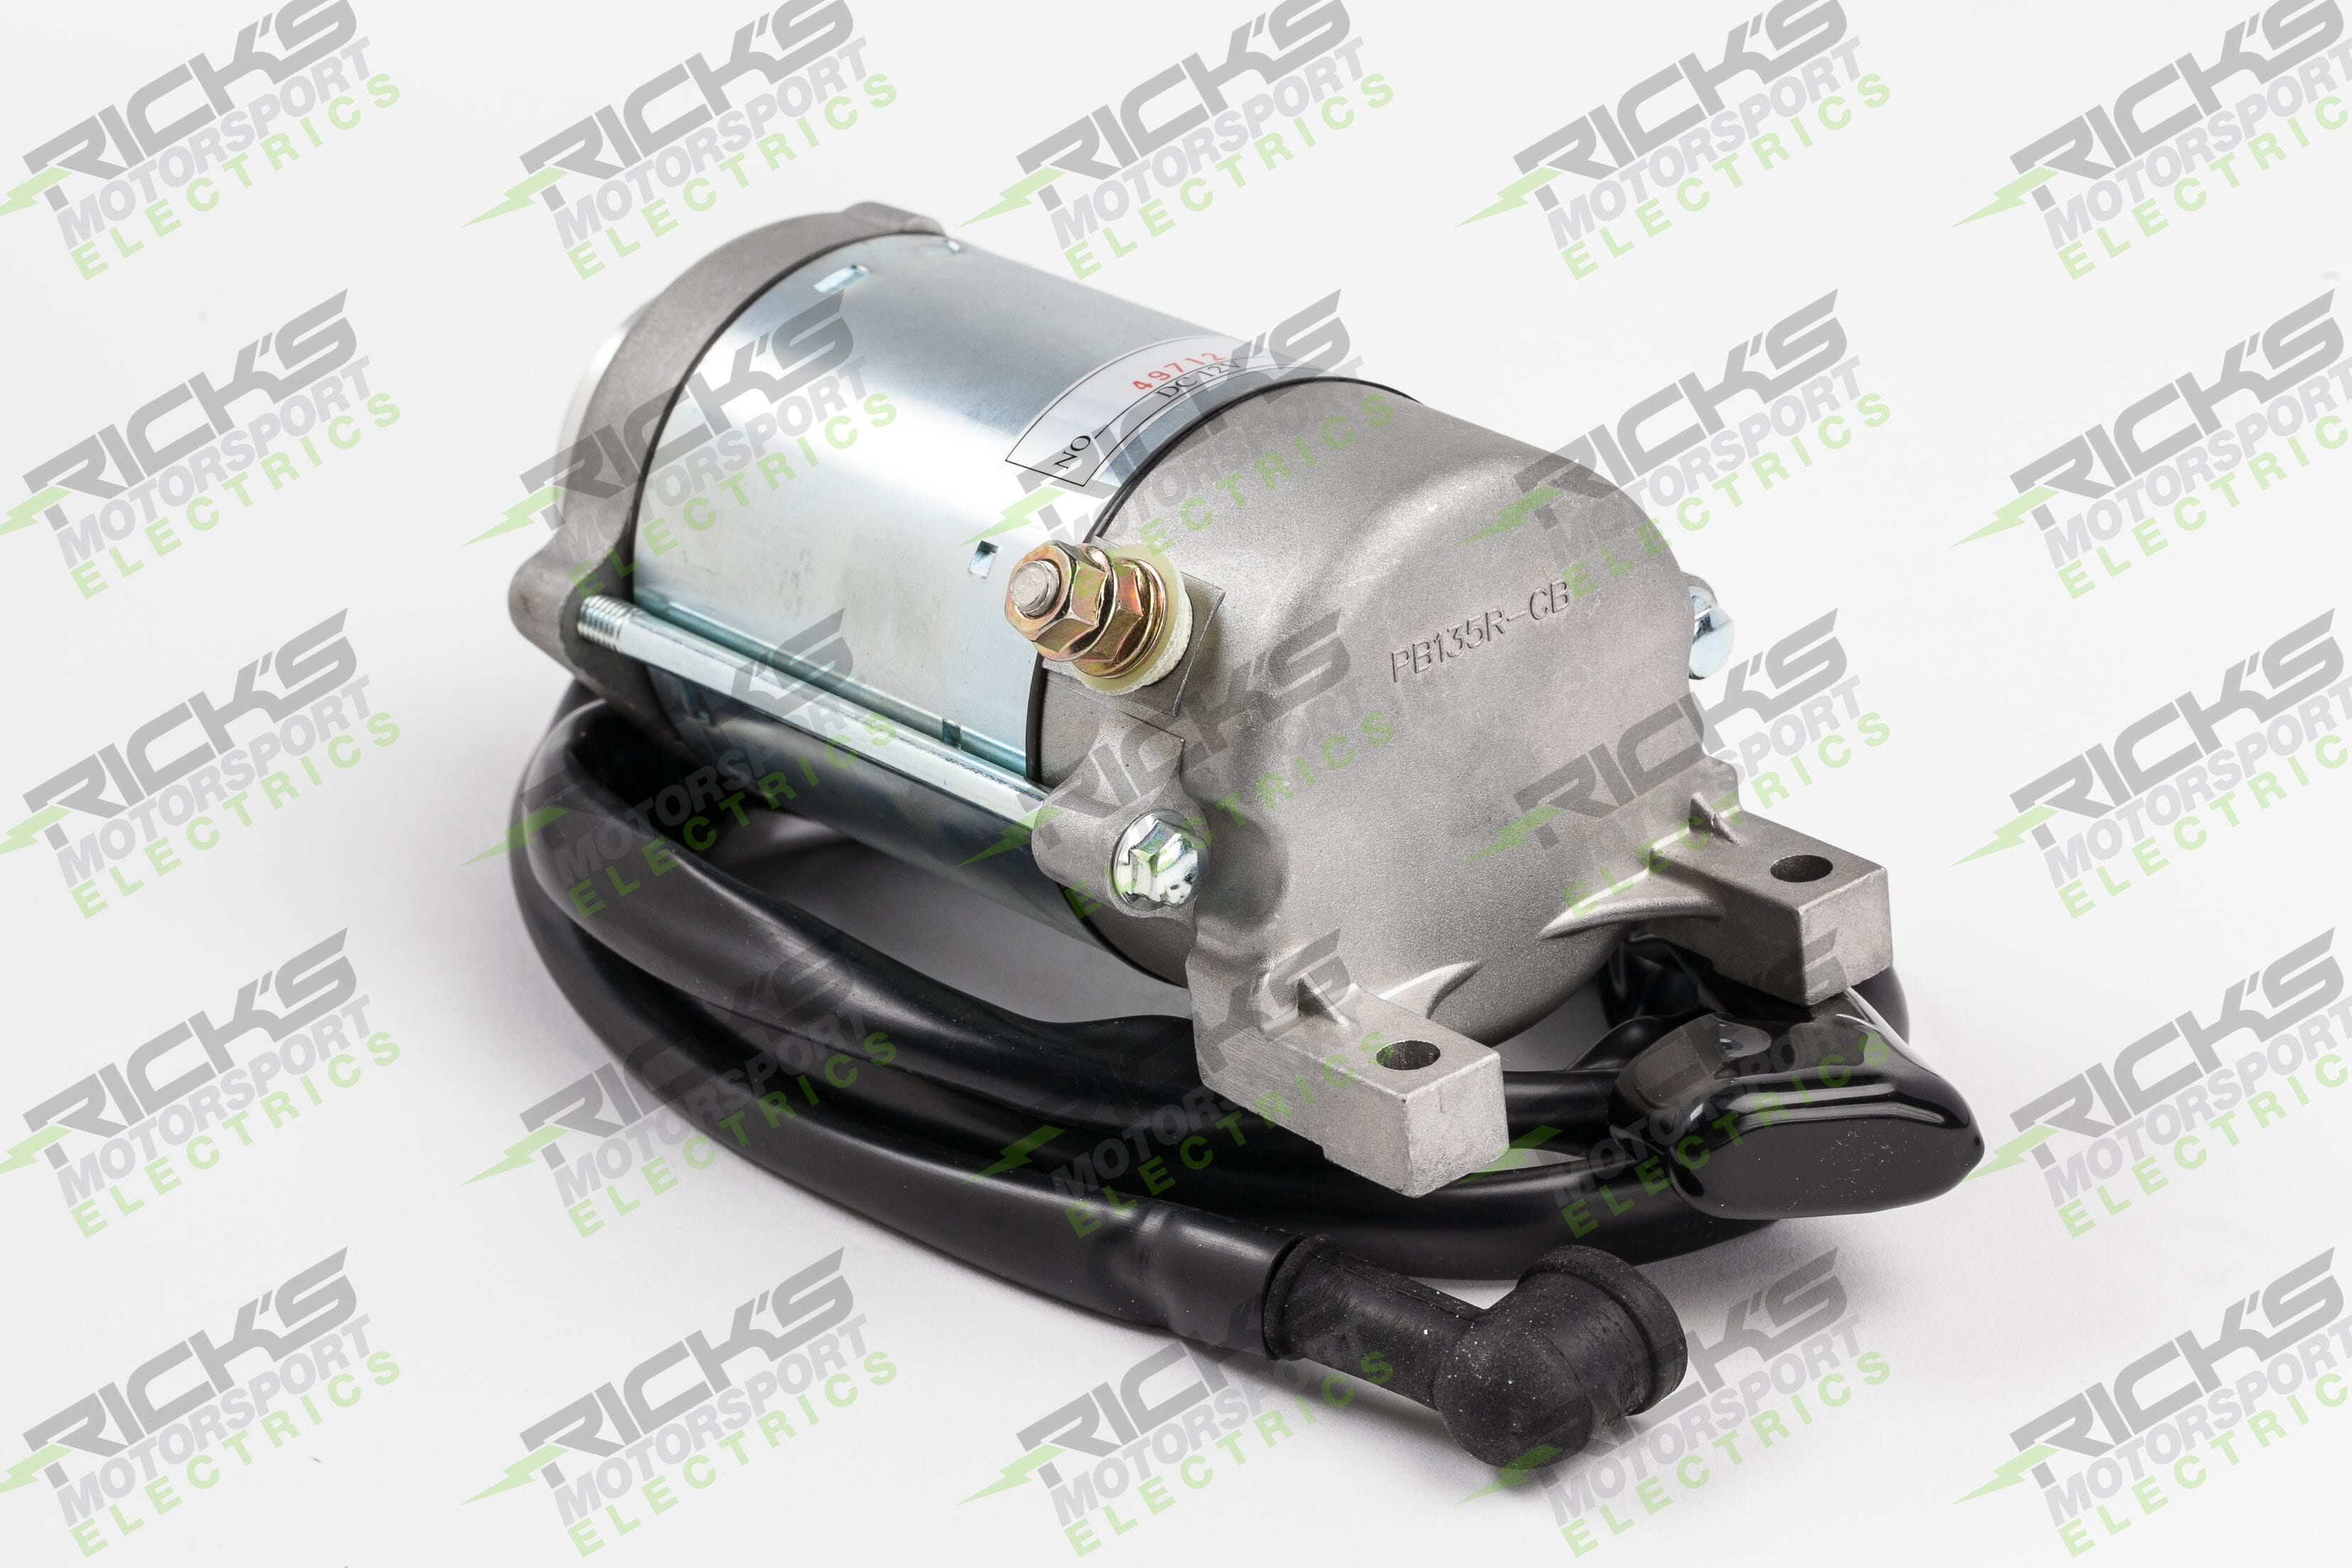 Details about  / HONDA ST1100 1996 1084cc Arrowhead Starter Motor